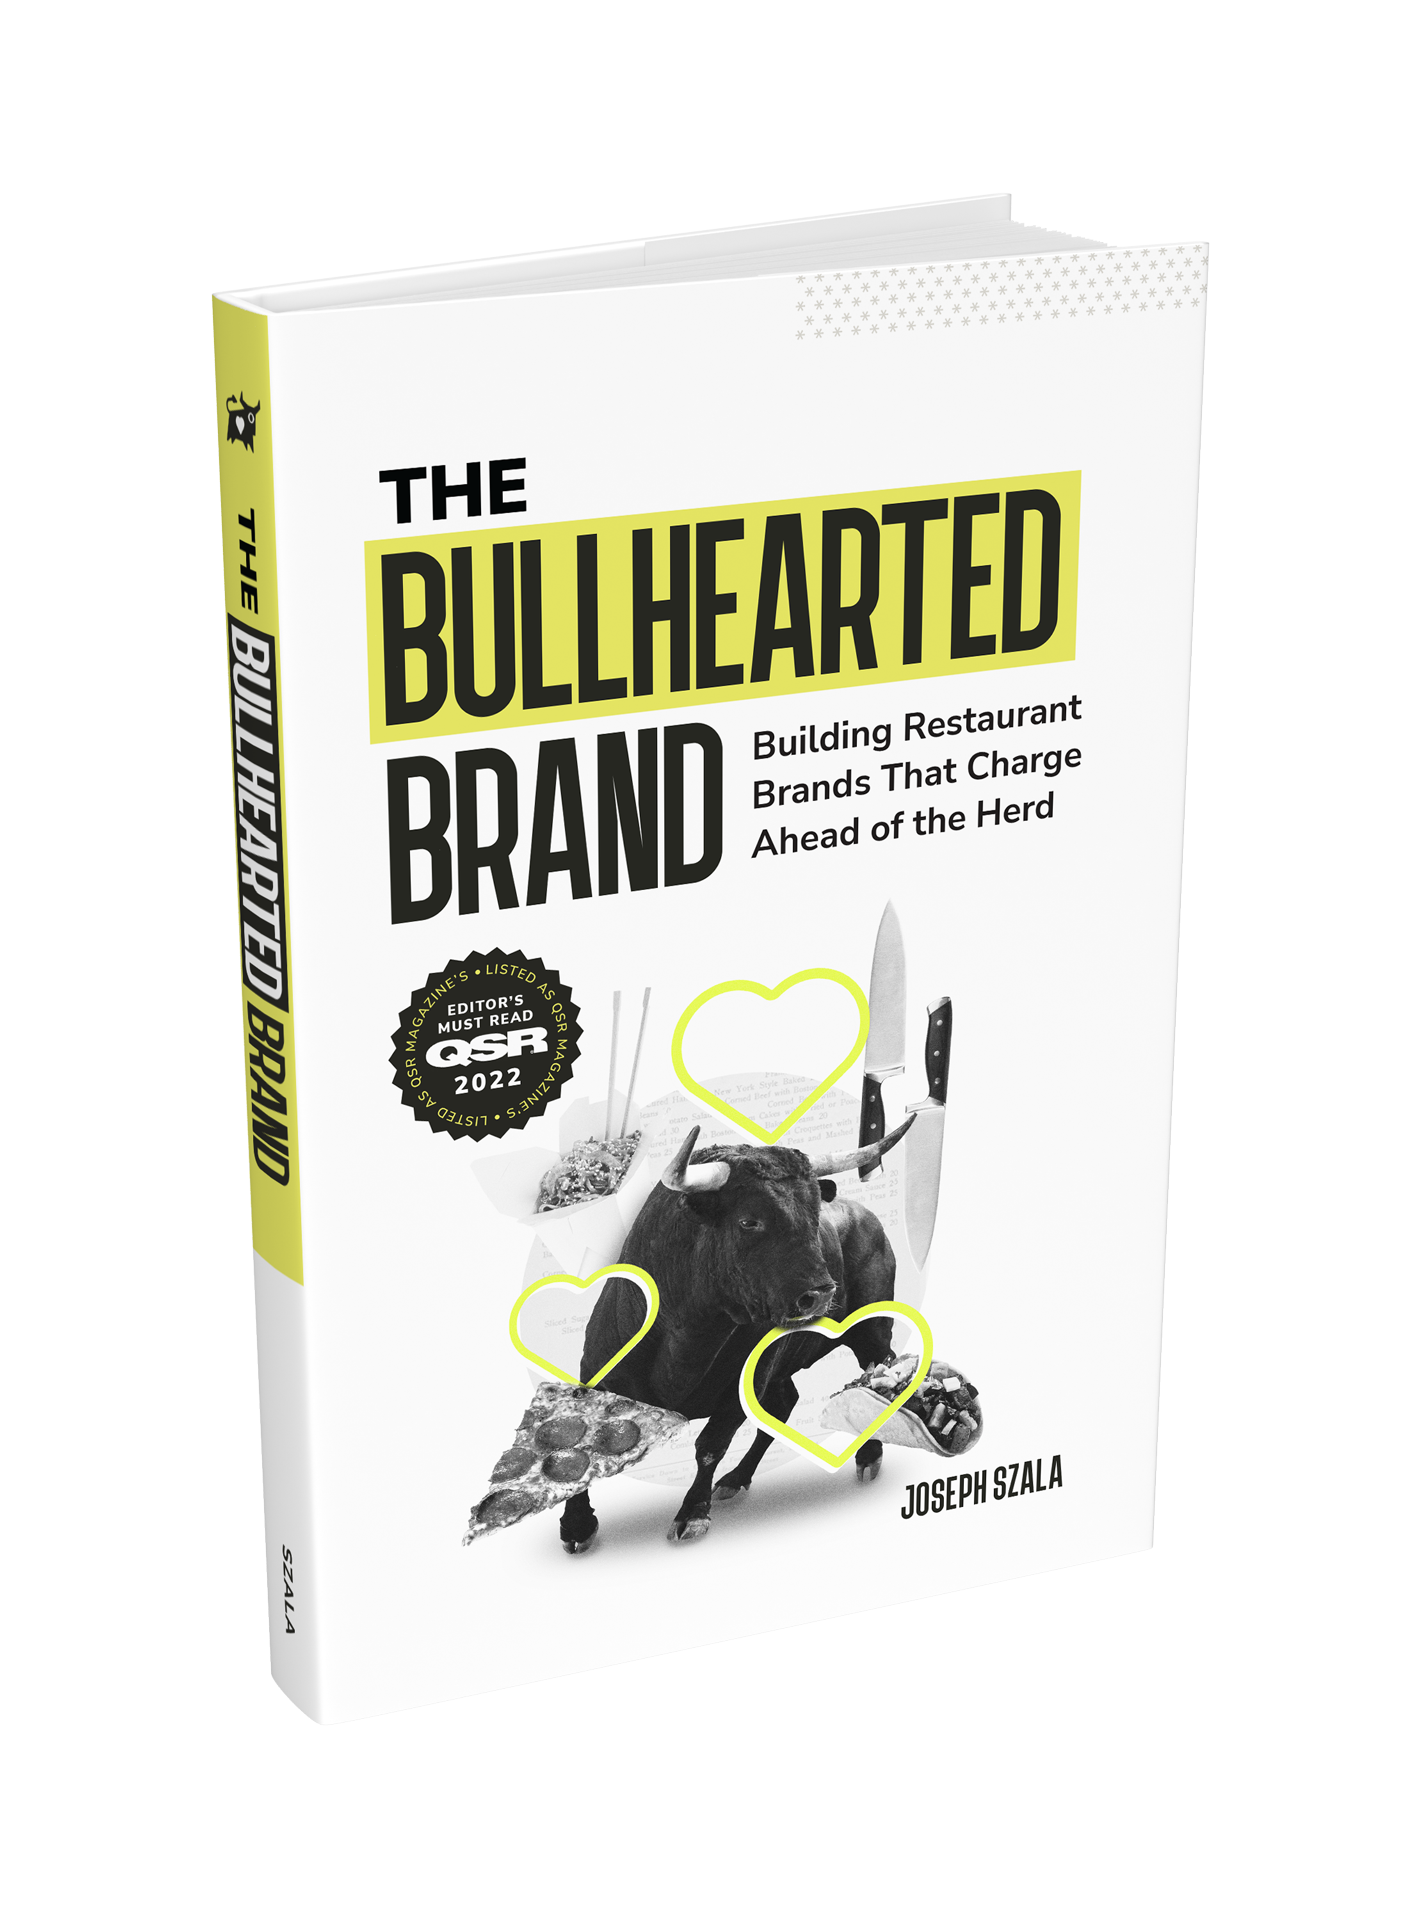 Restaurant branding and concept development book - The Bullhearted Brand